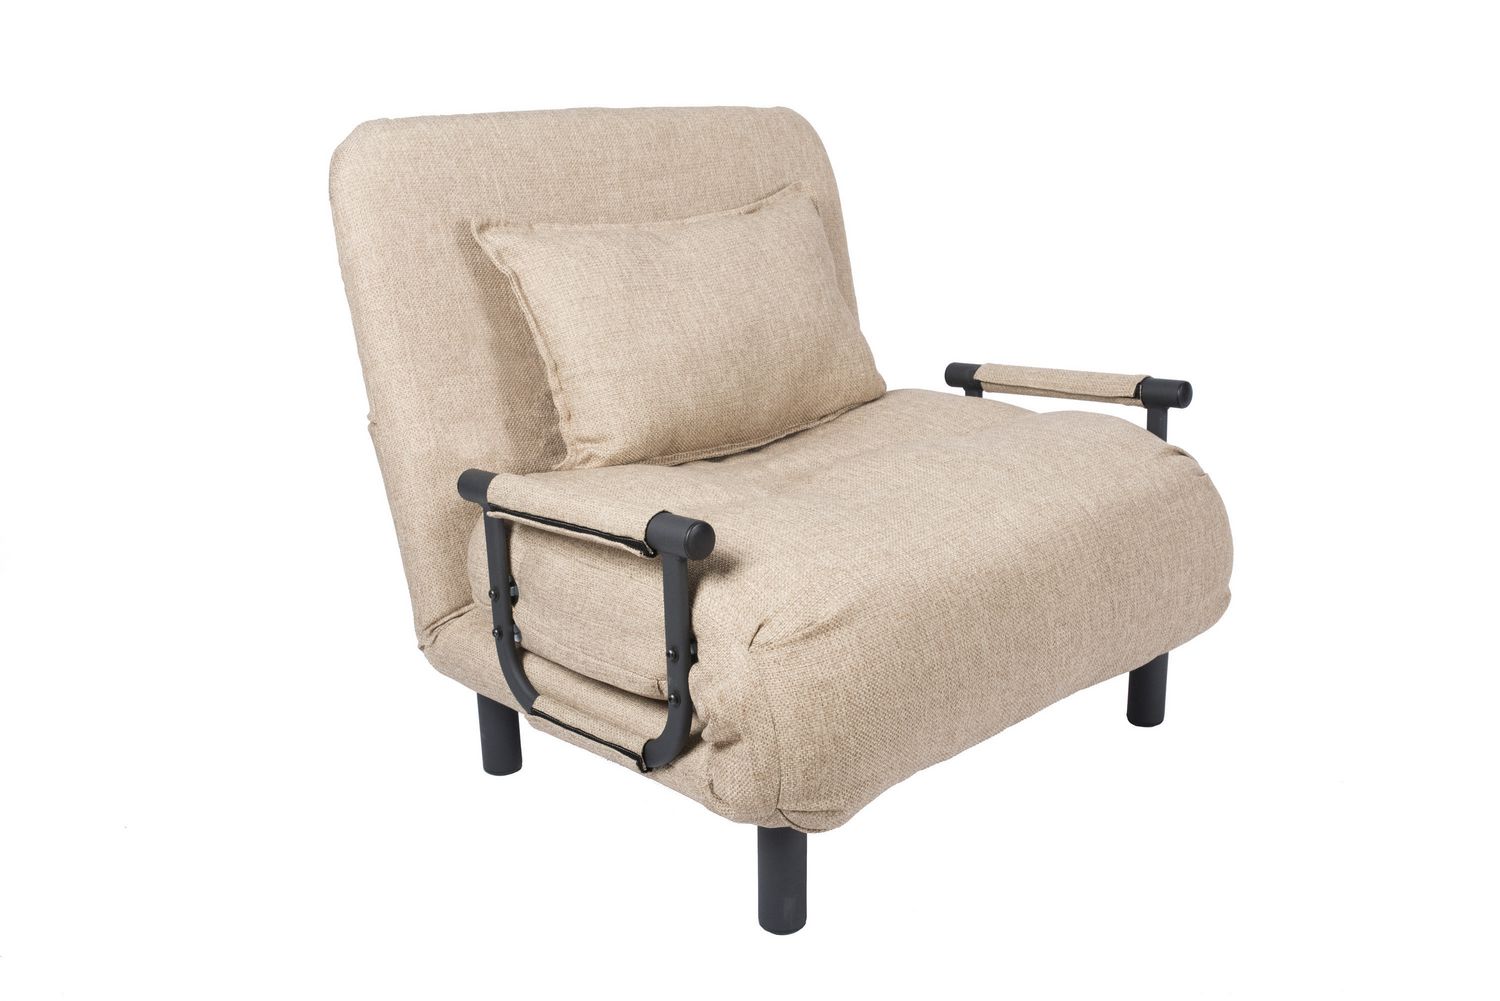 Single Sleeper Convertible Chair, Multiple Colors | Walmart Canada